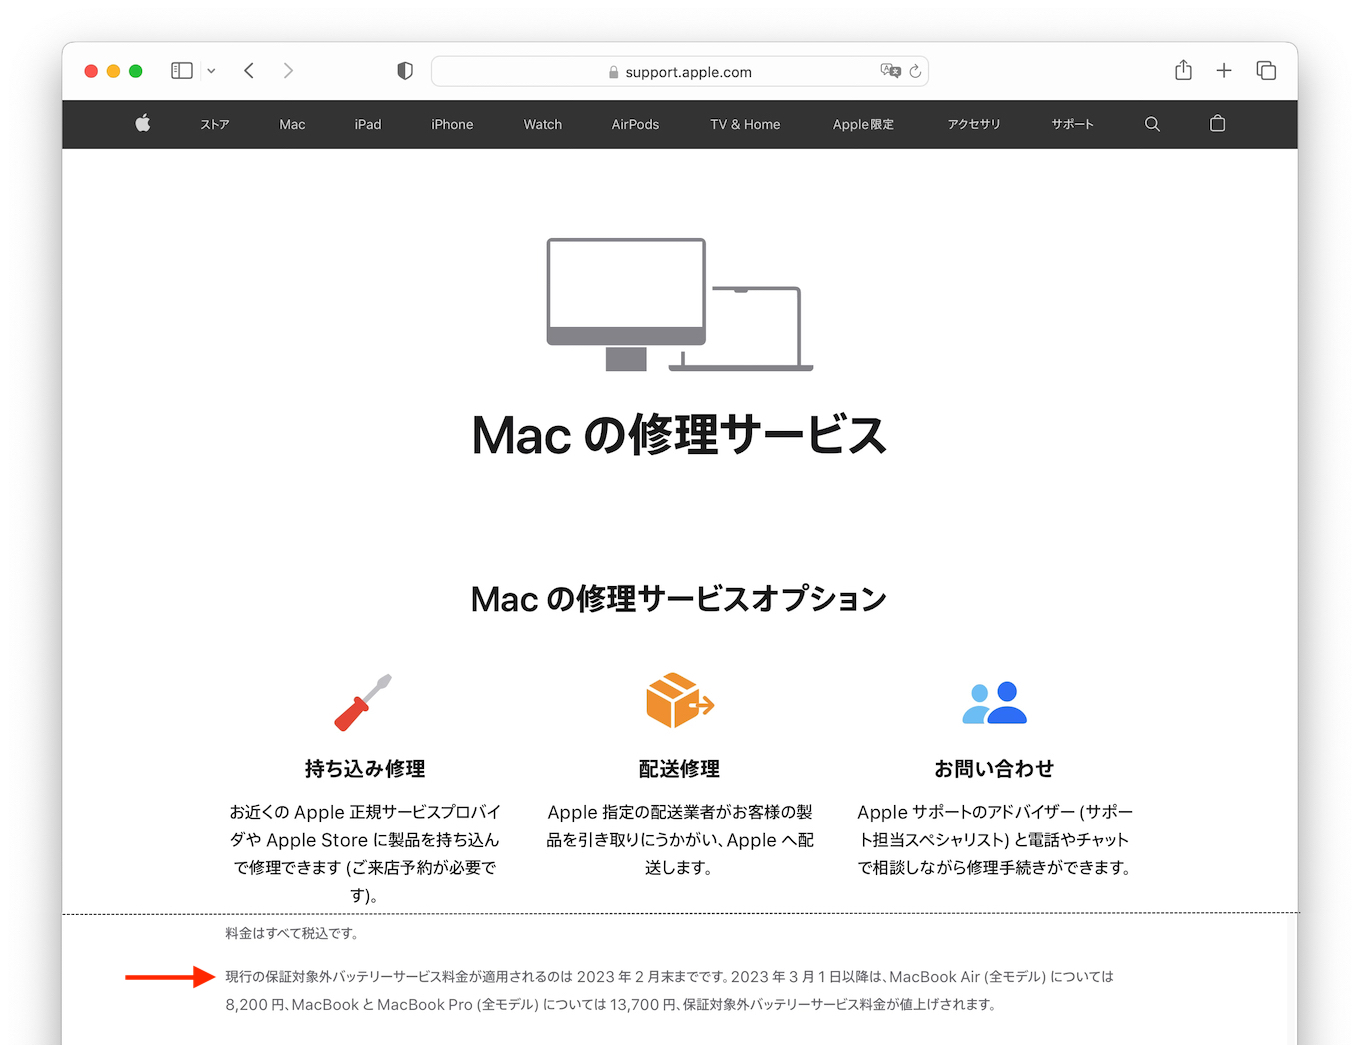 Mac の修理サービス – Apple サポート